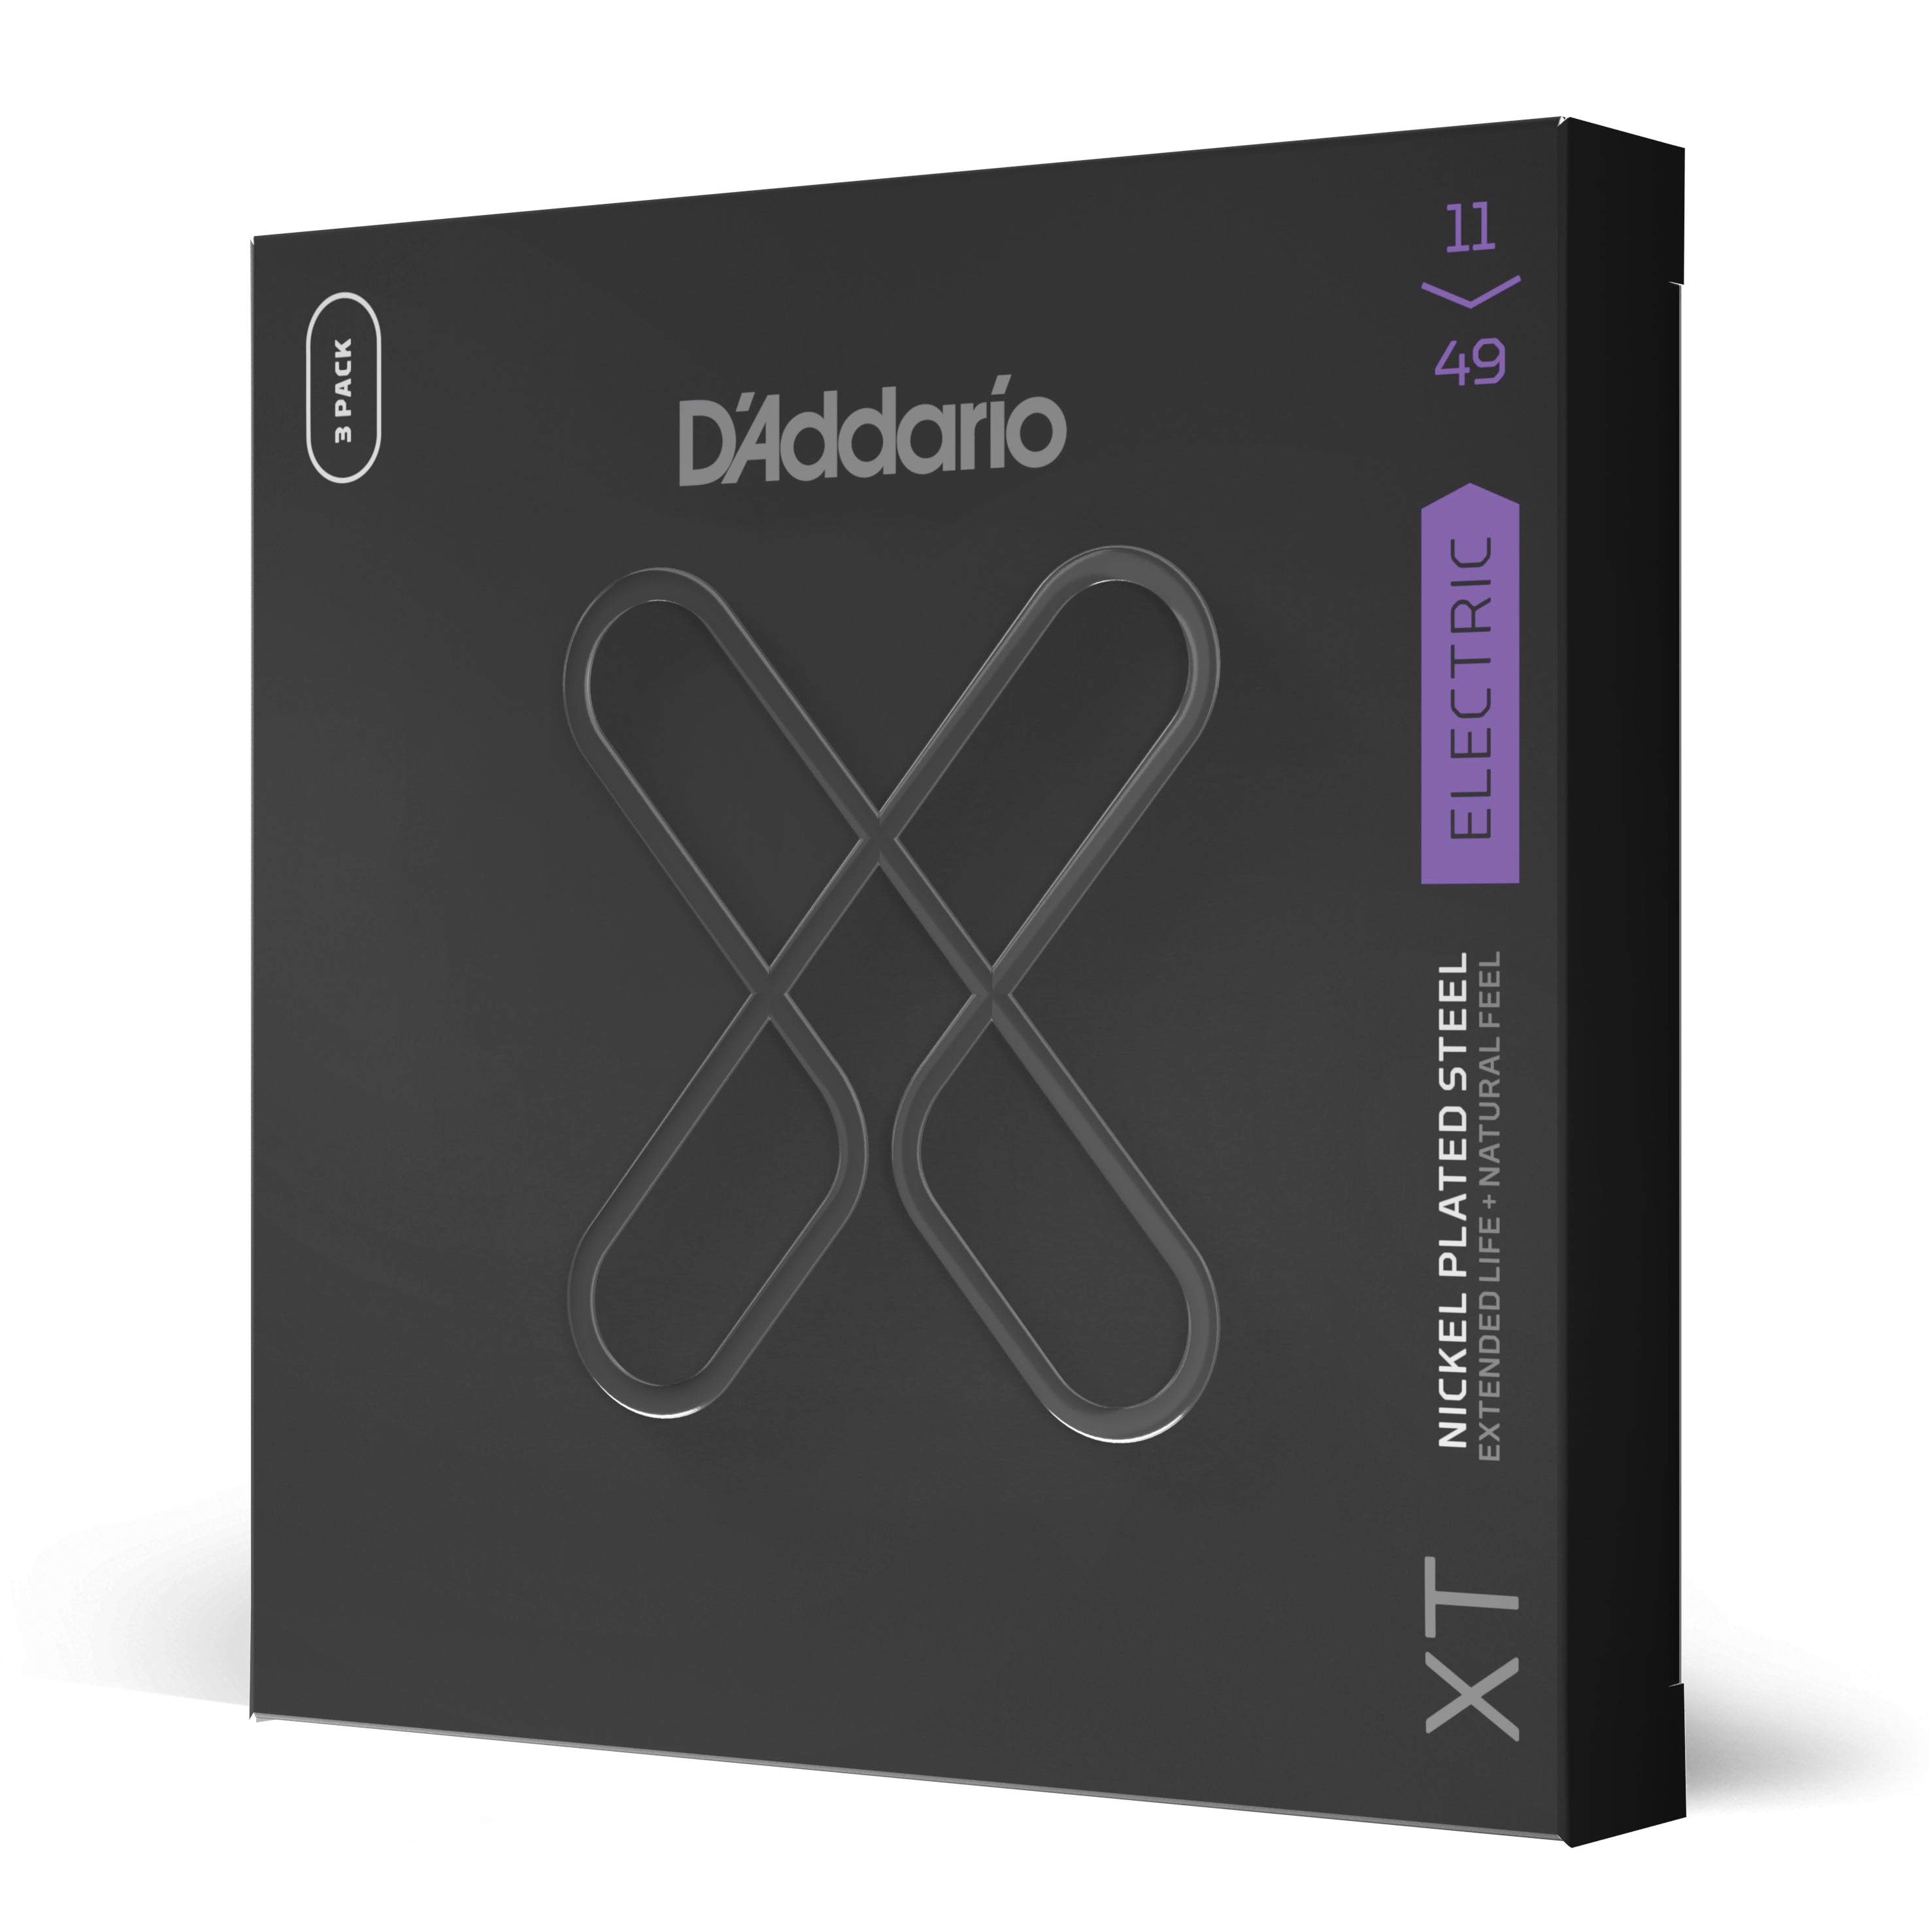 D'Addario XT Coated Nickel-Plated Steel 11-49 Electric Guitar Strings, 3-Pack